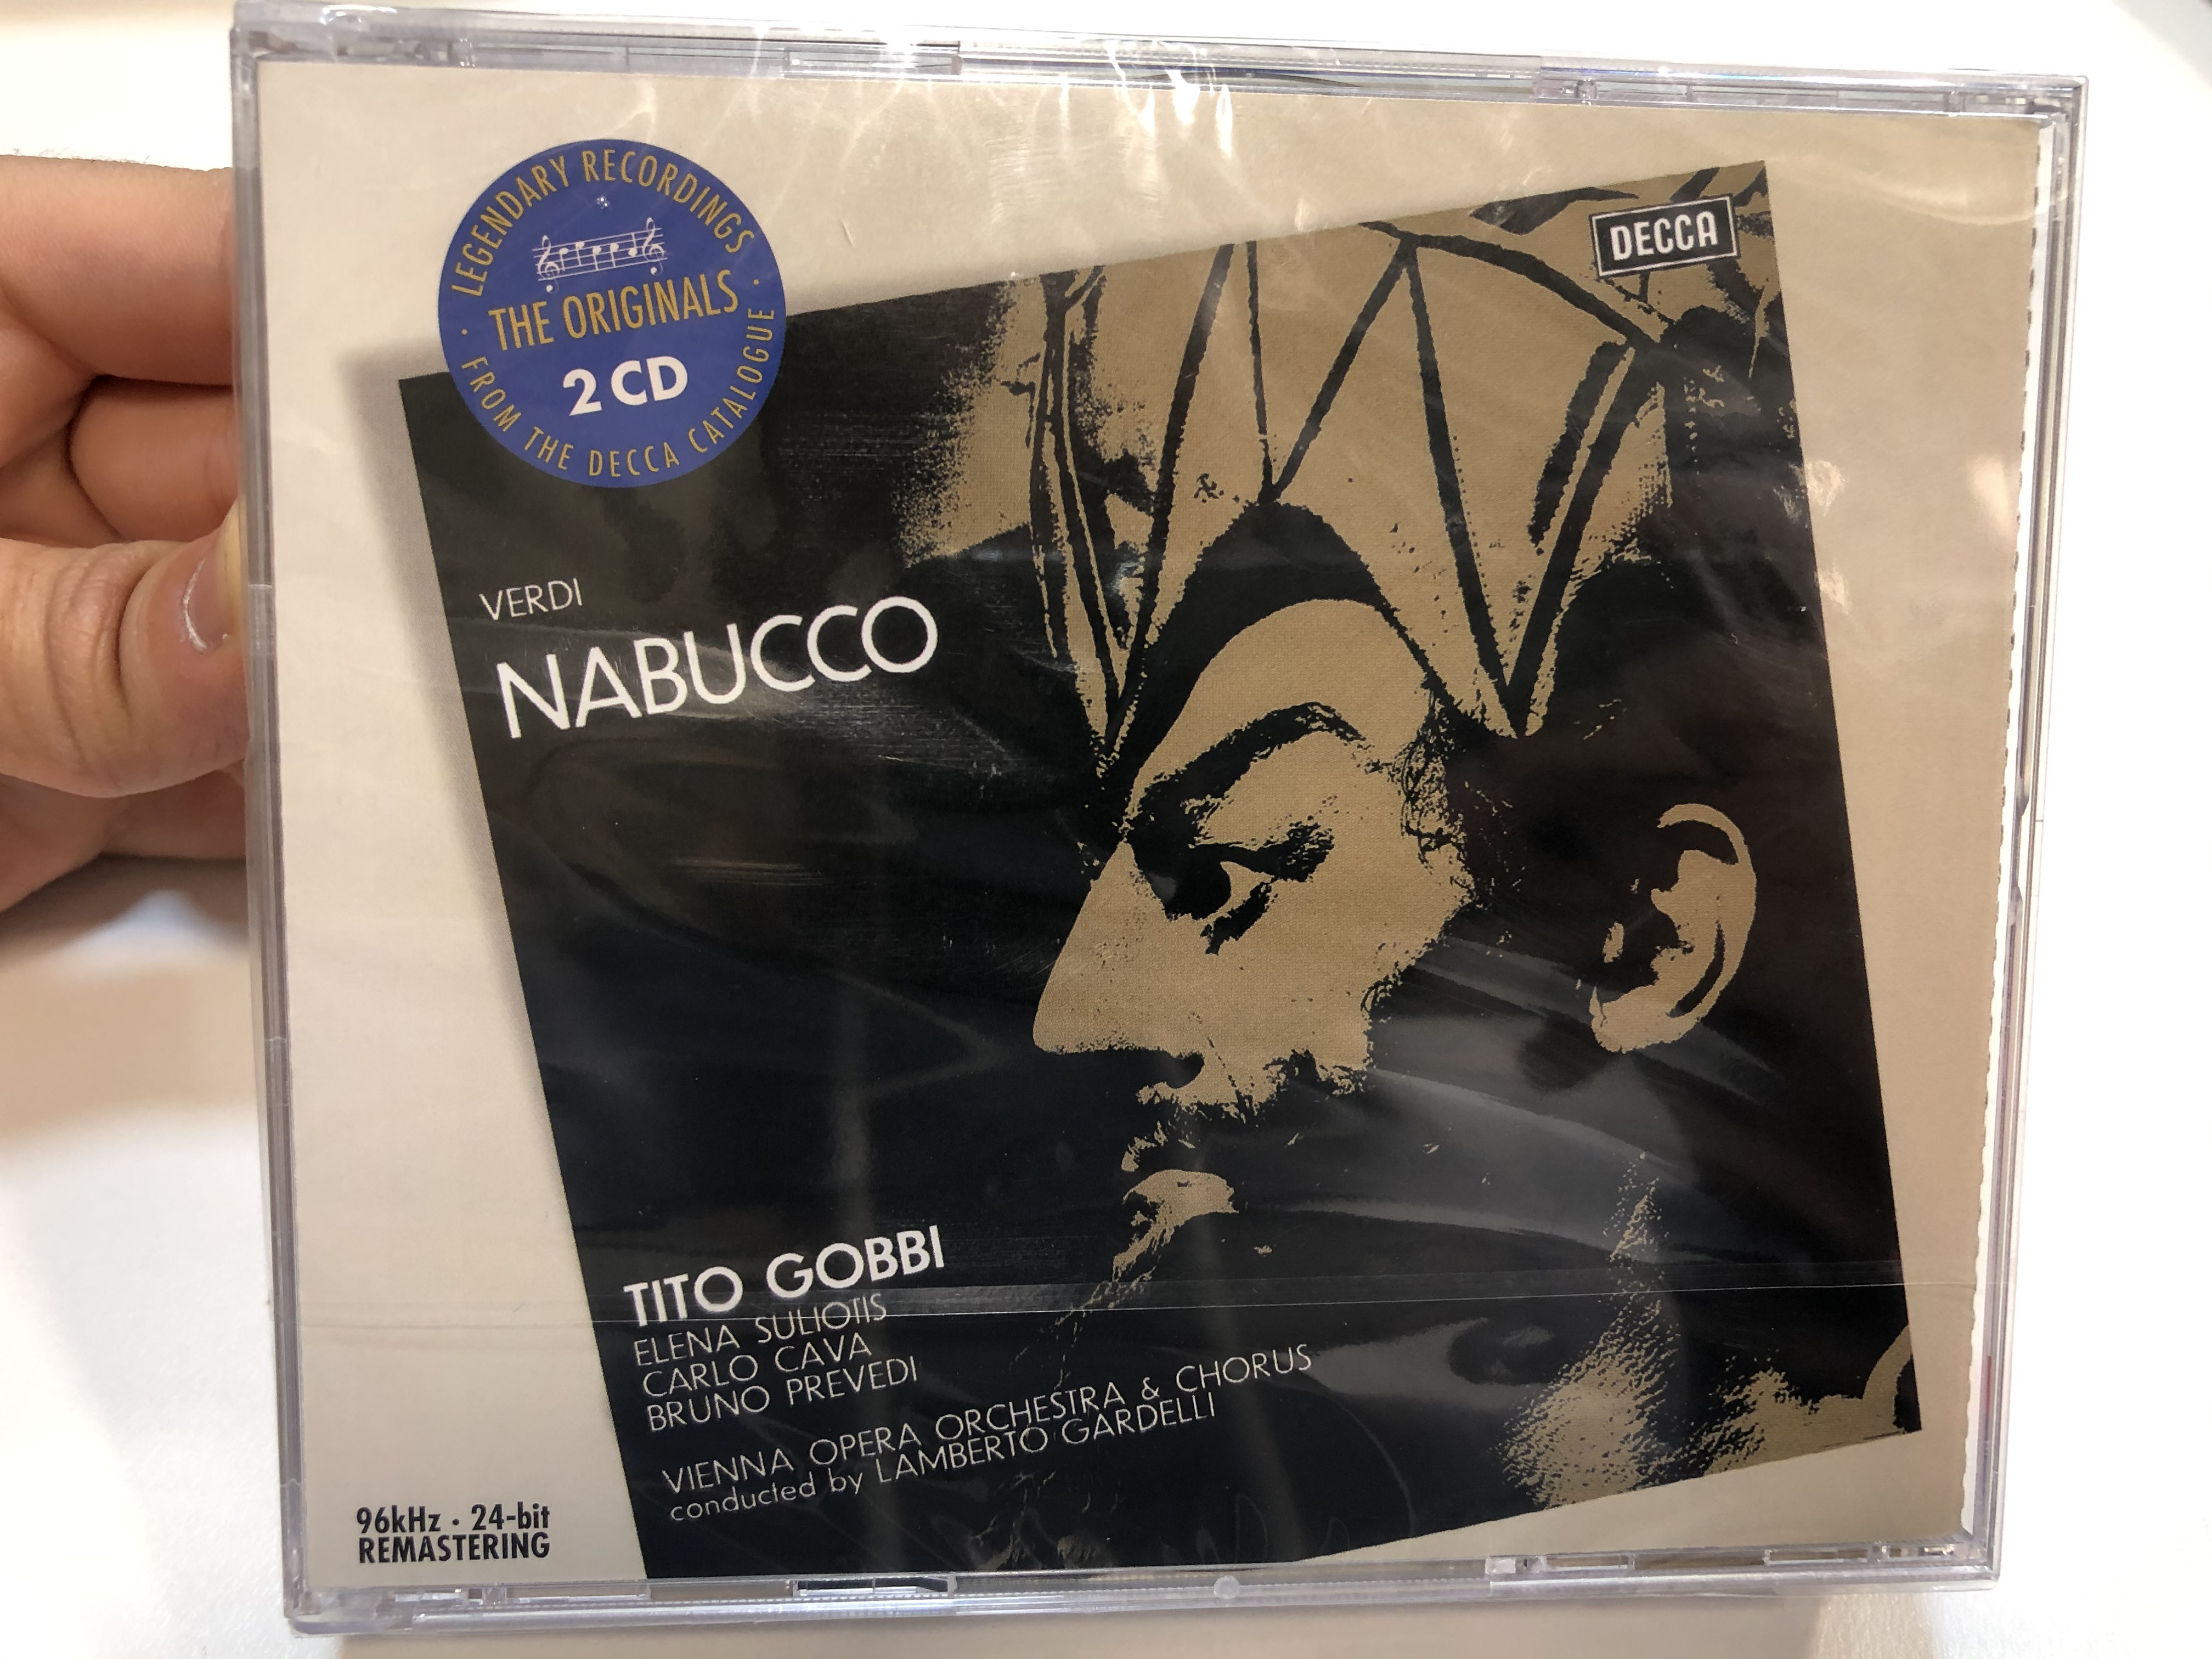 verdi-nabucco-tito-gobbi-elena-souliotis-carlo-cava-bruno-prevedi-vienna-opera-orchestra-chorus-lamberto-gardelli-the-originals-decca-2x-audio-cd-2009-478-1717-1-.jpg